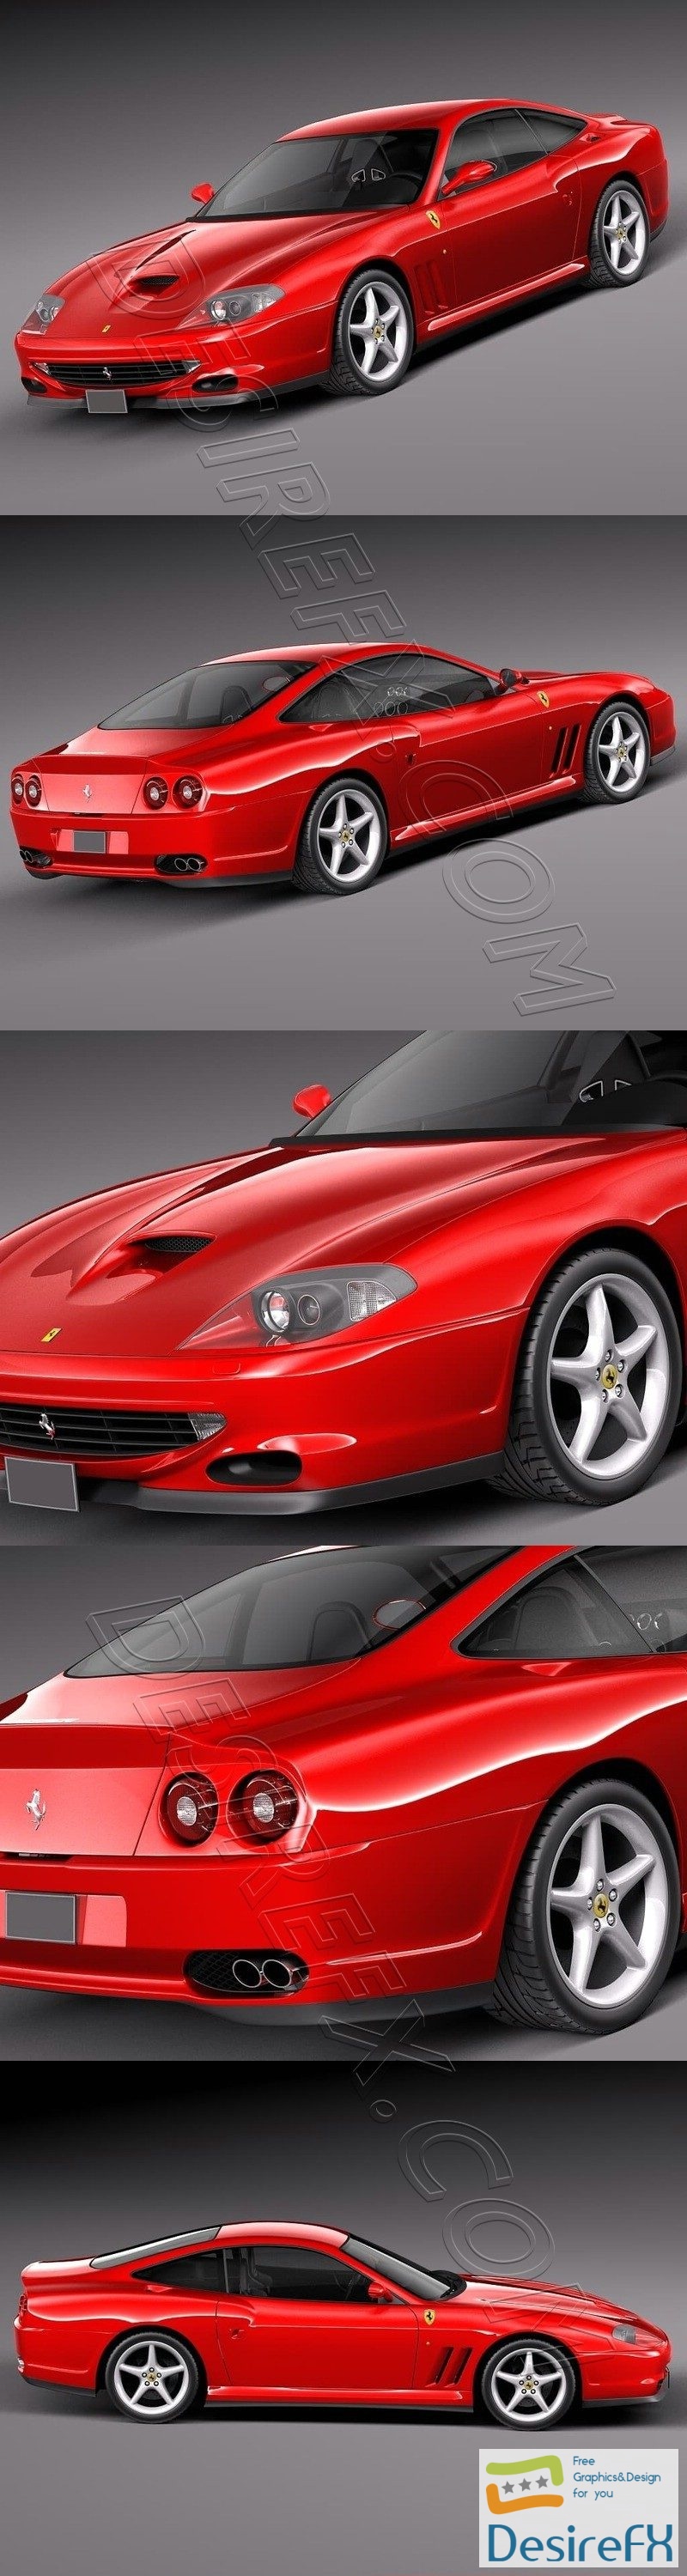 Ferrari 550 Maranello 1996-2002 3D Model